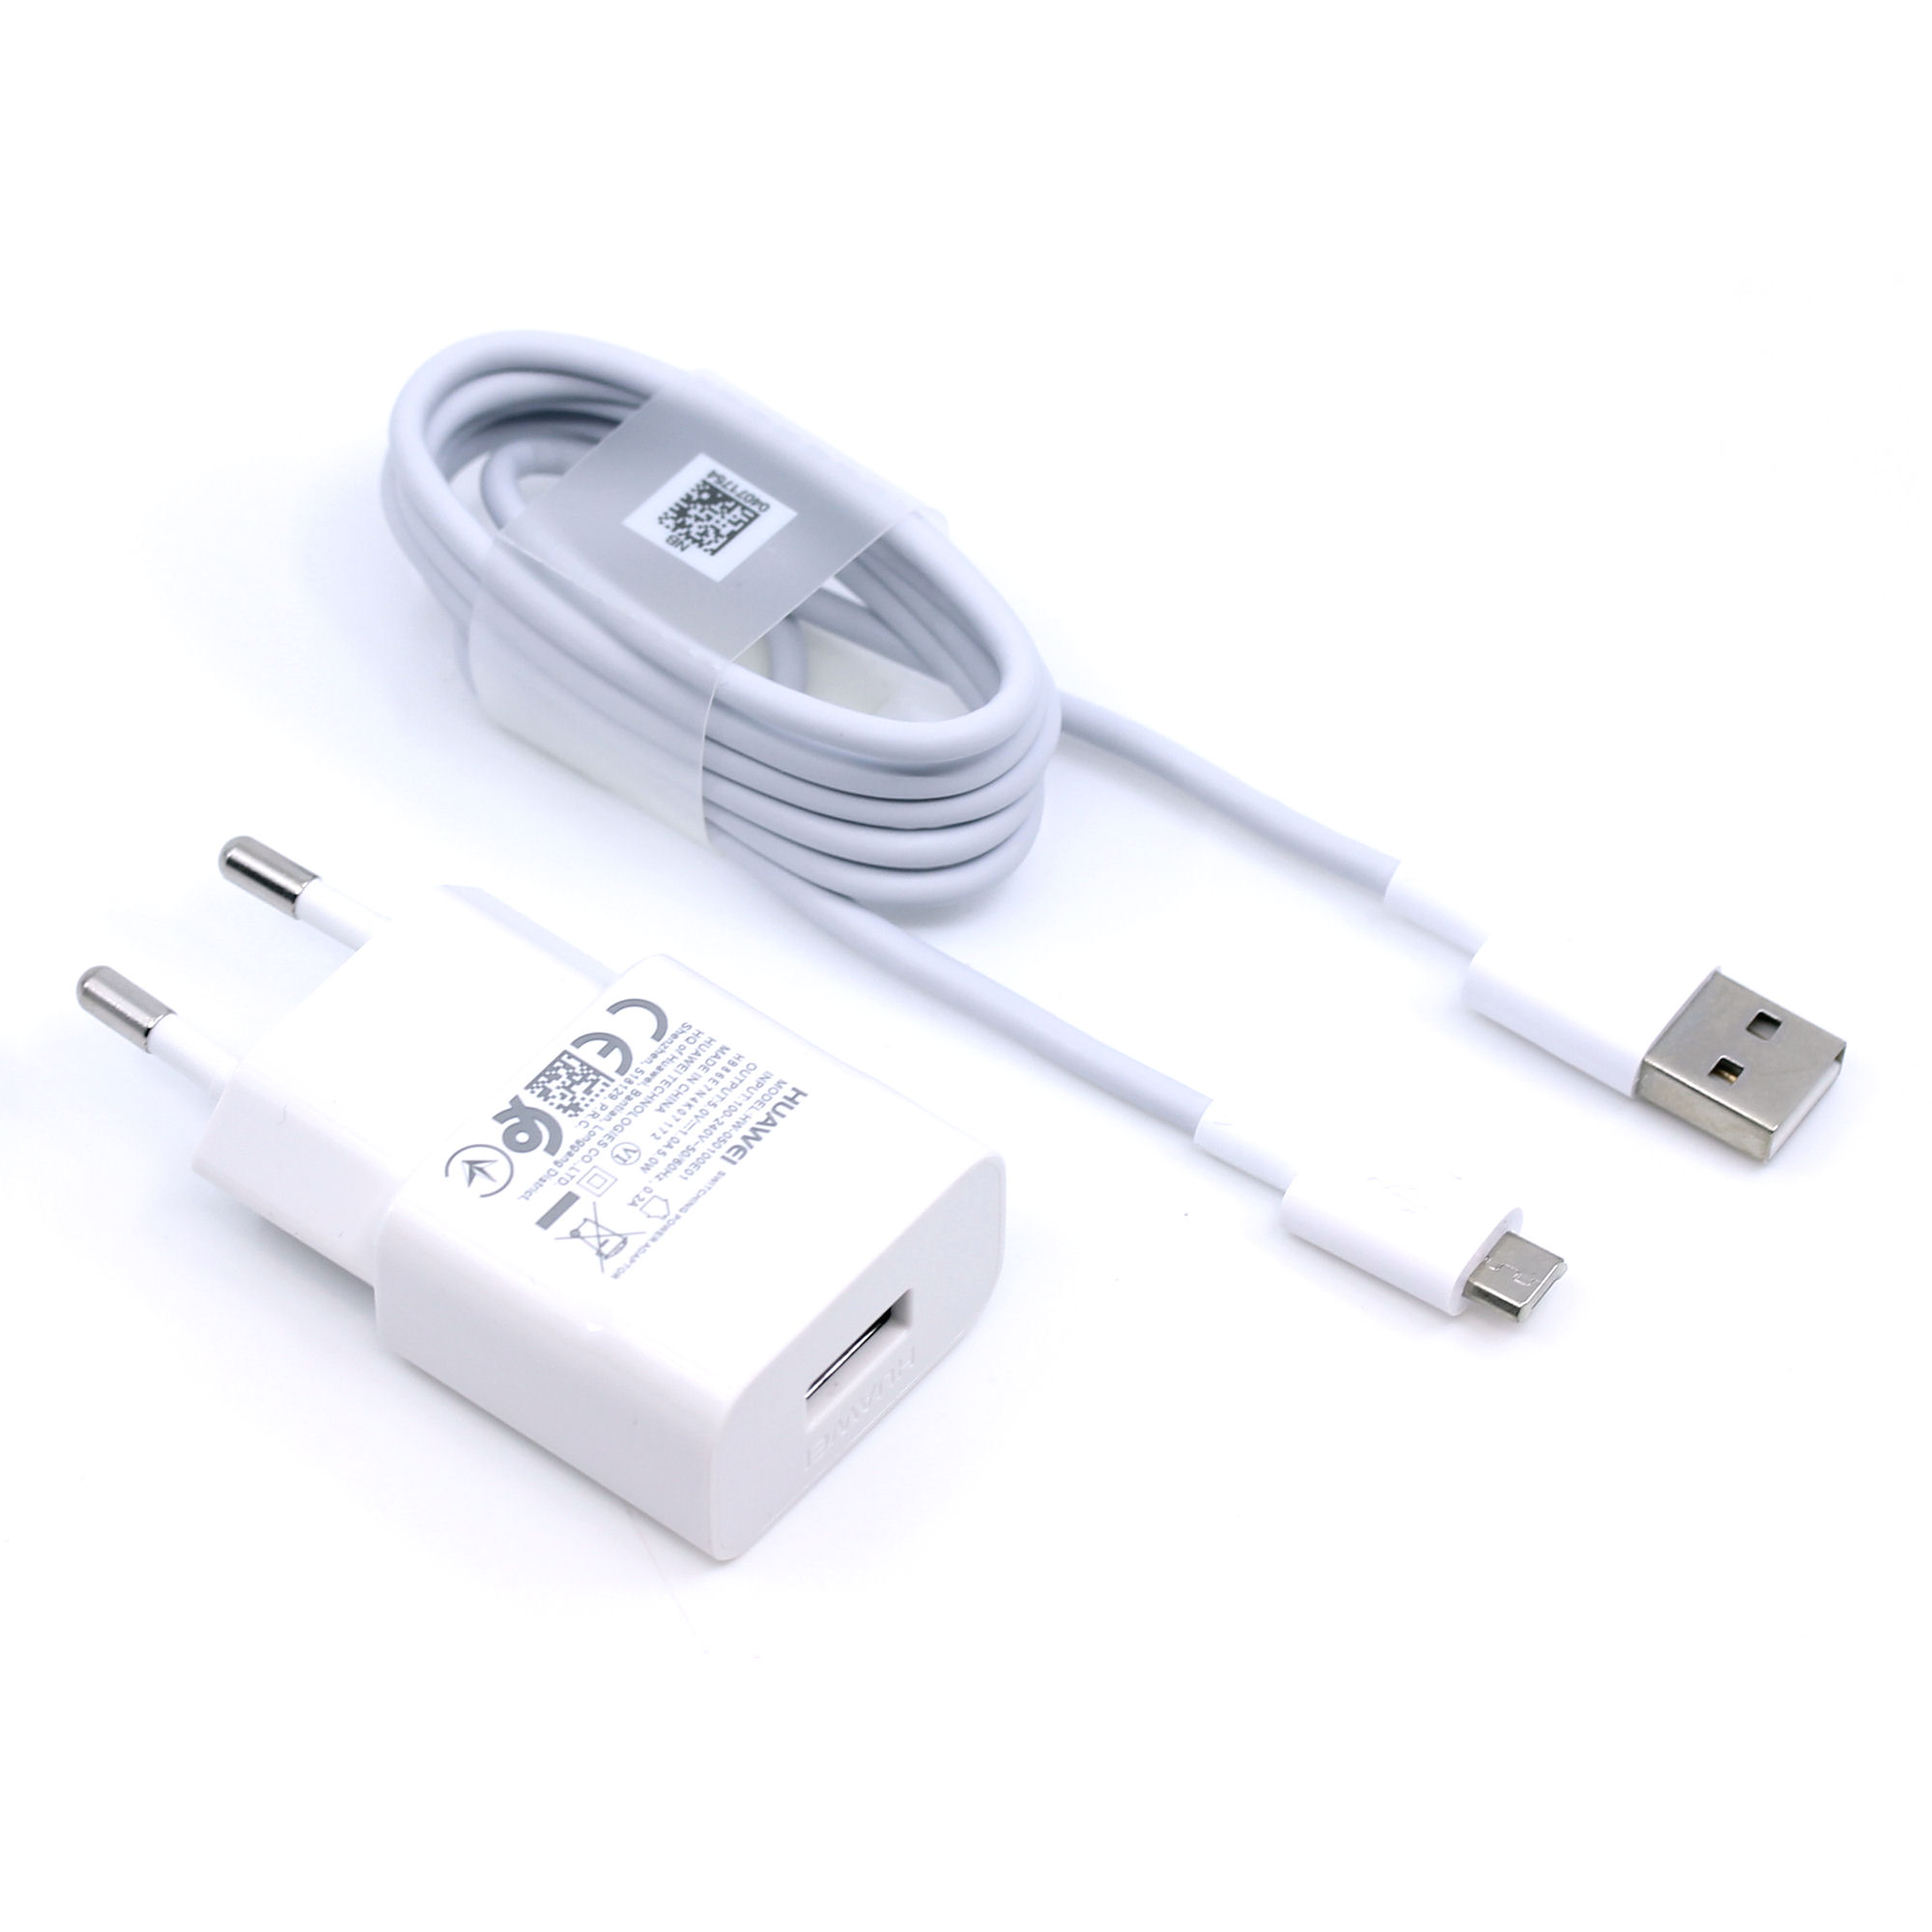 Huawei Ladegerät HW-050100E01 1A mit Micro-USB Kabel weiß